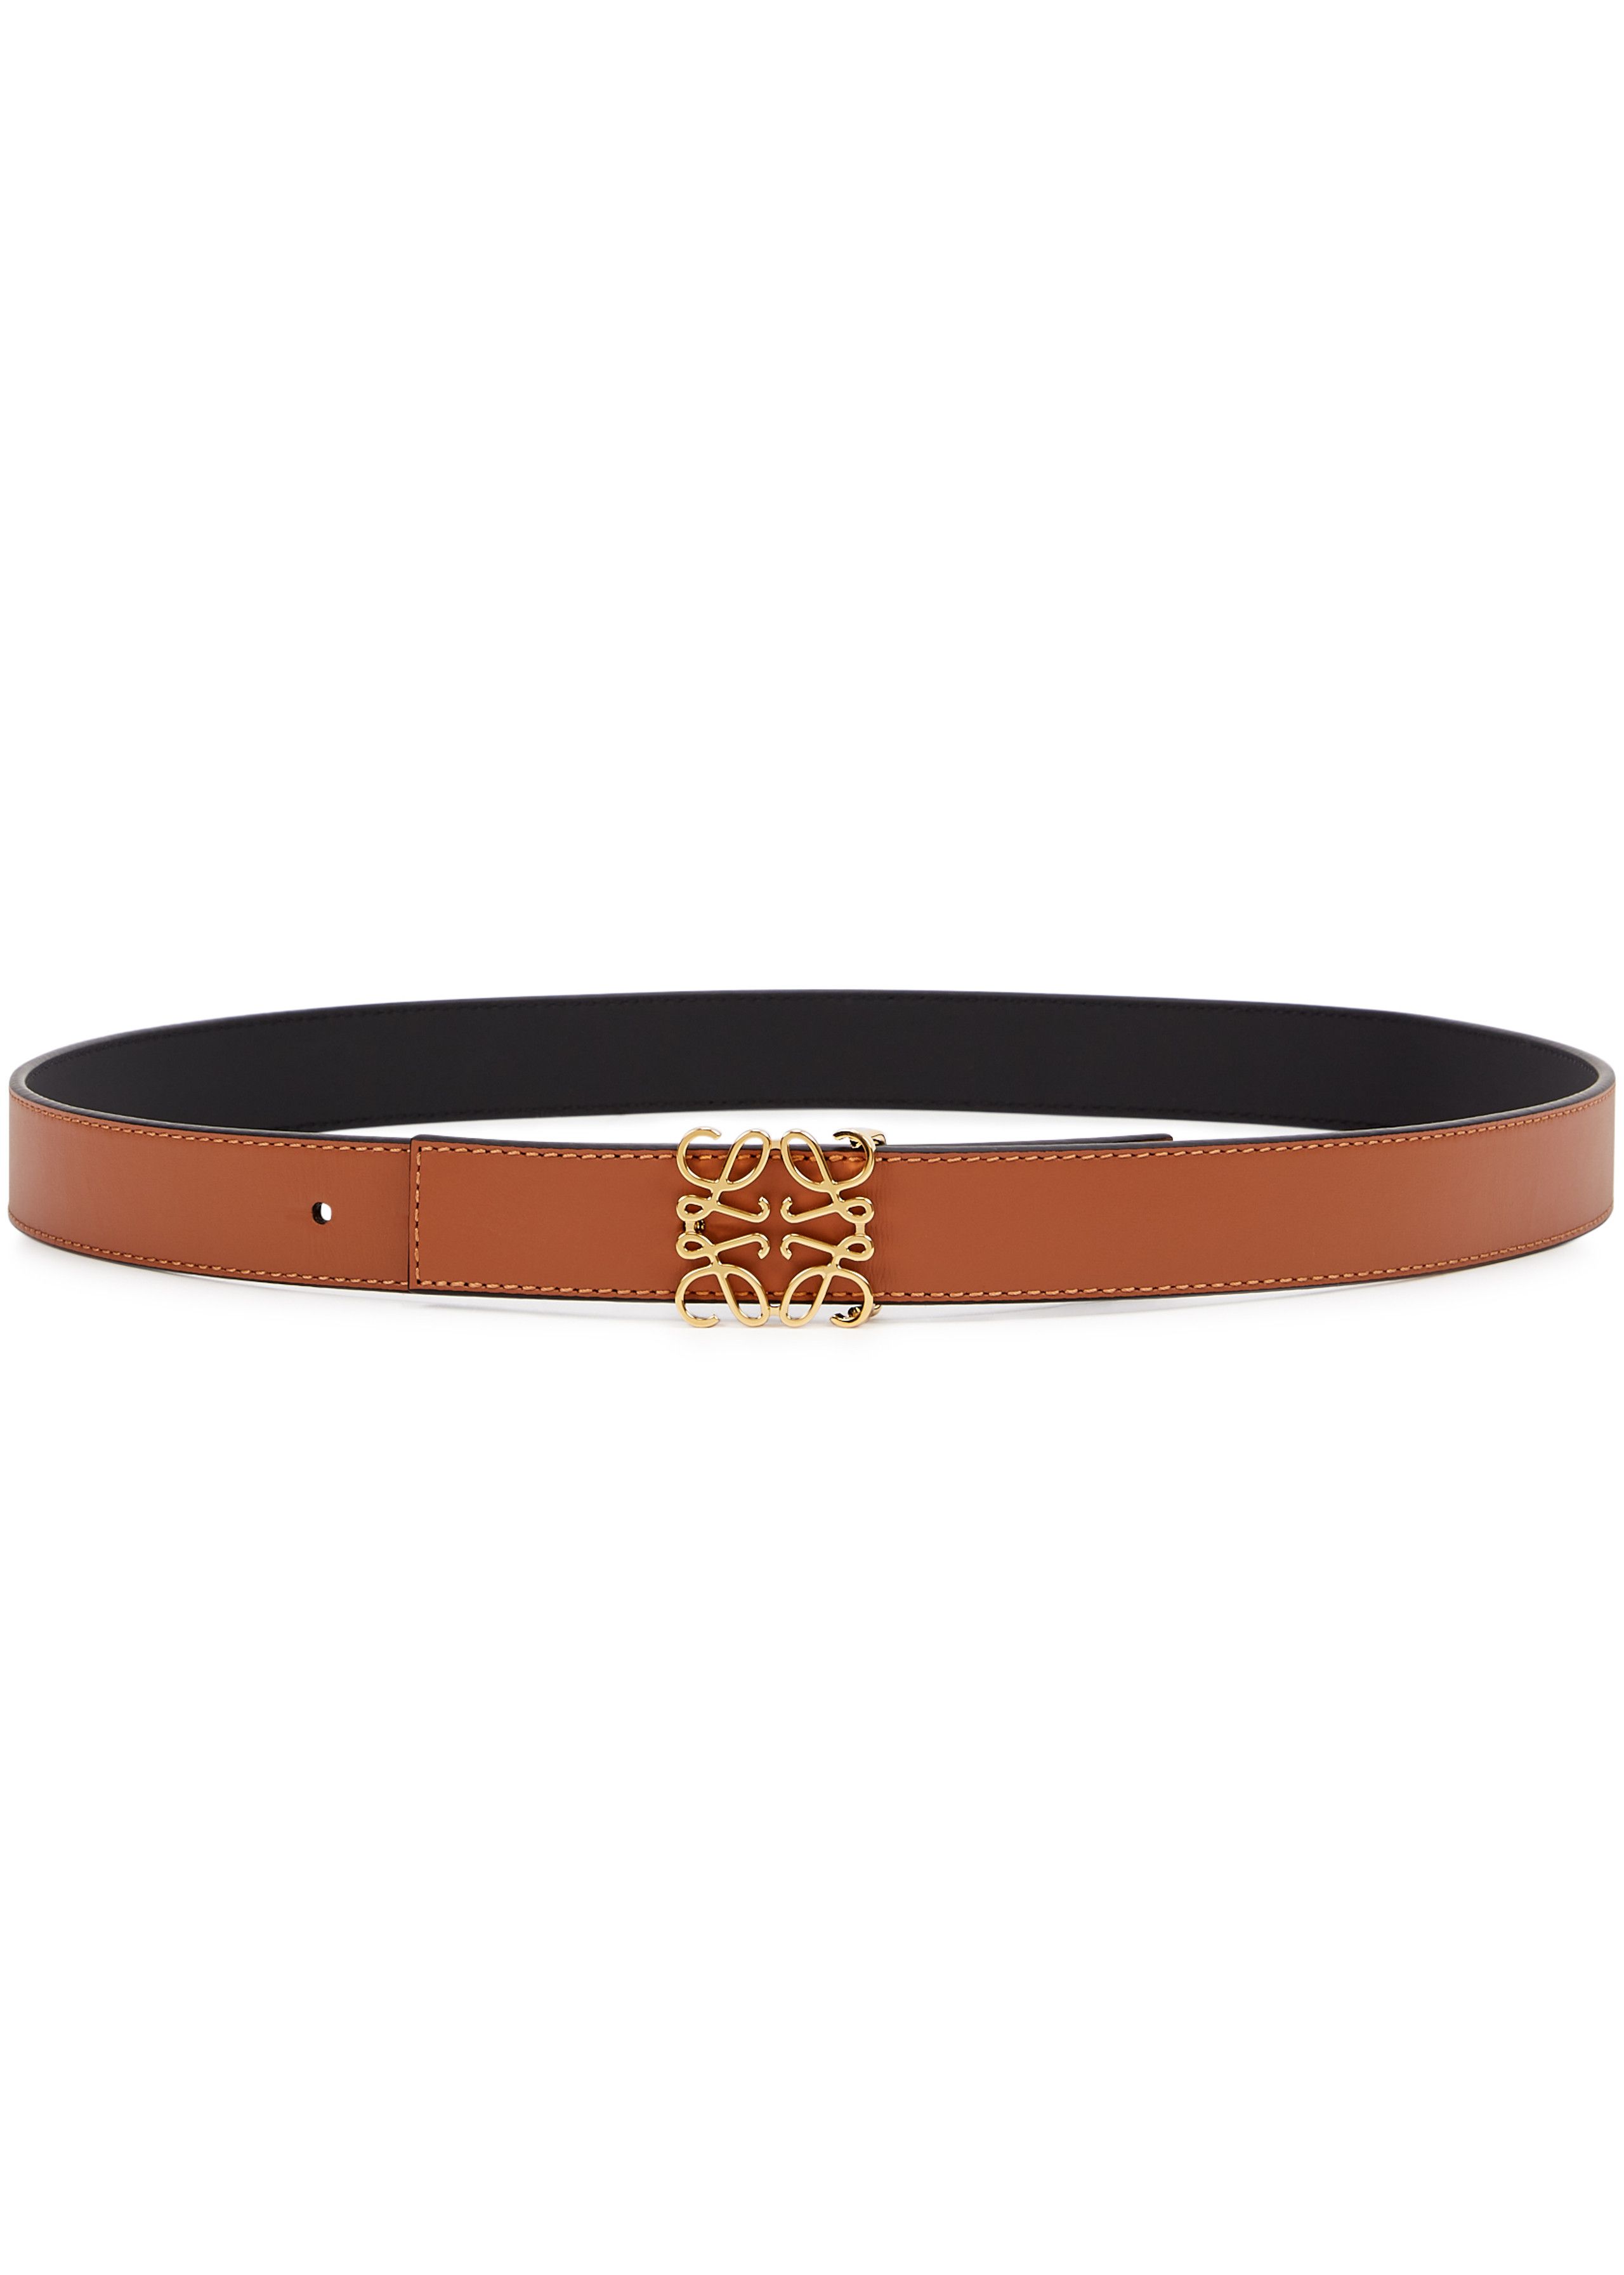 Anagram reversible leather belt | Harvey Nichols